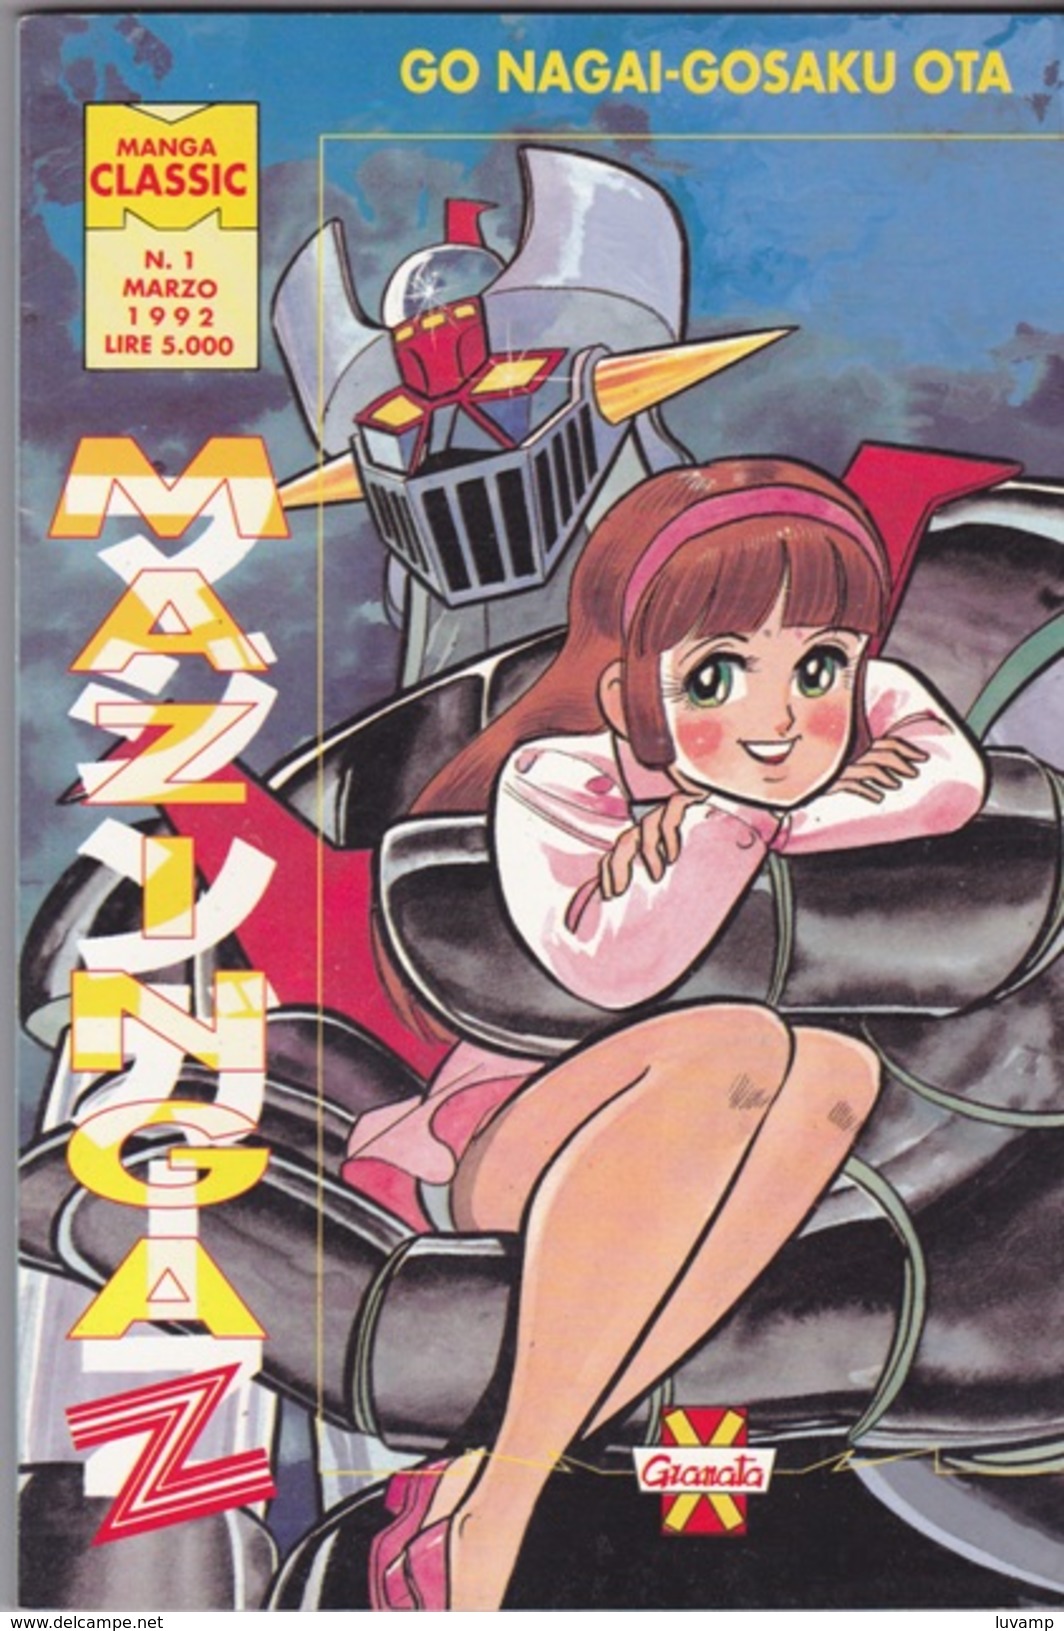 MANGA CLASSIC N, 1 Del Marzo 1992 (260912) - Manga